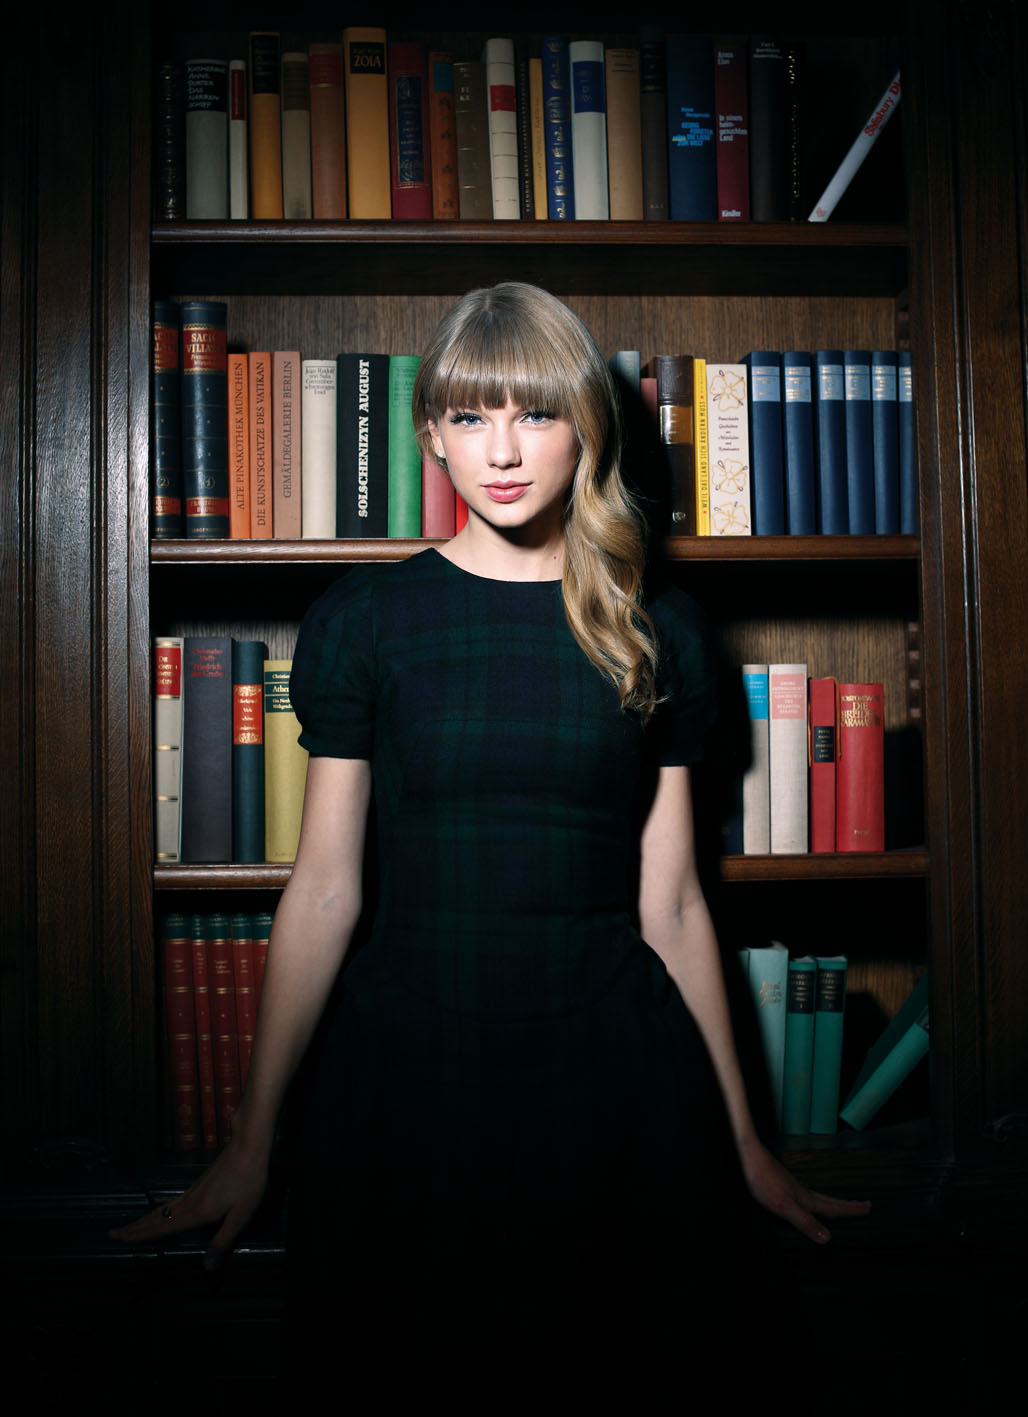 People 1028x1417 Taylor Swift singer women blue eyes blonde books looking at viewer celebrity spotlights